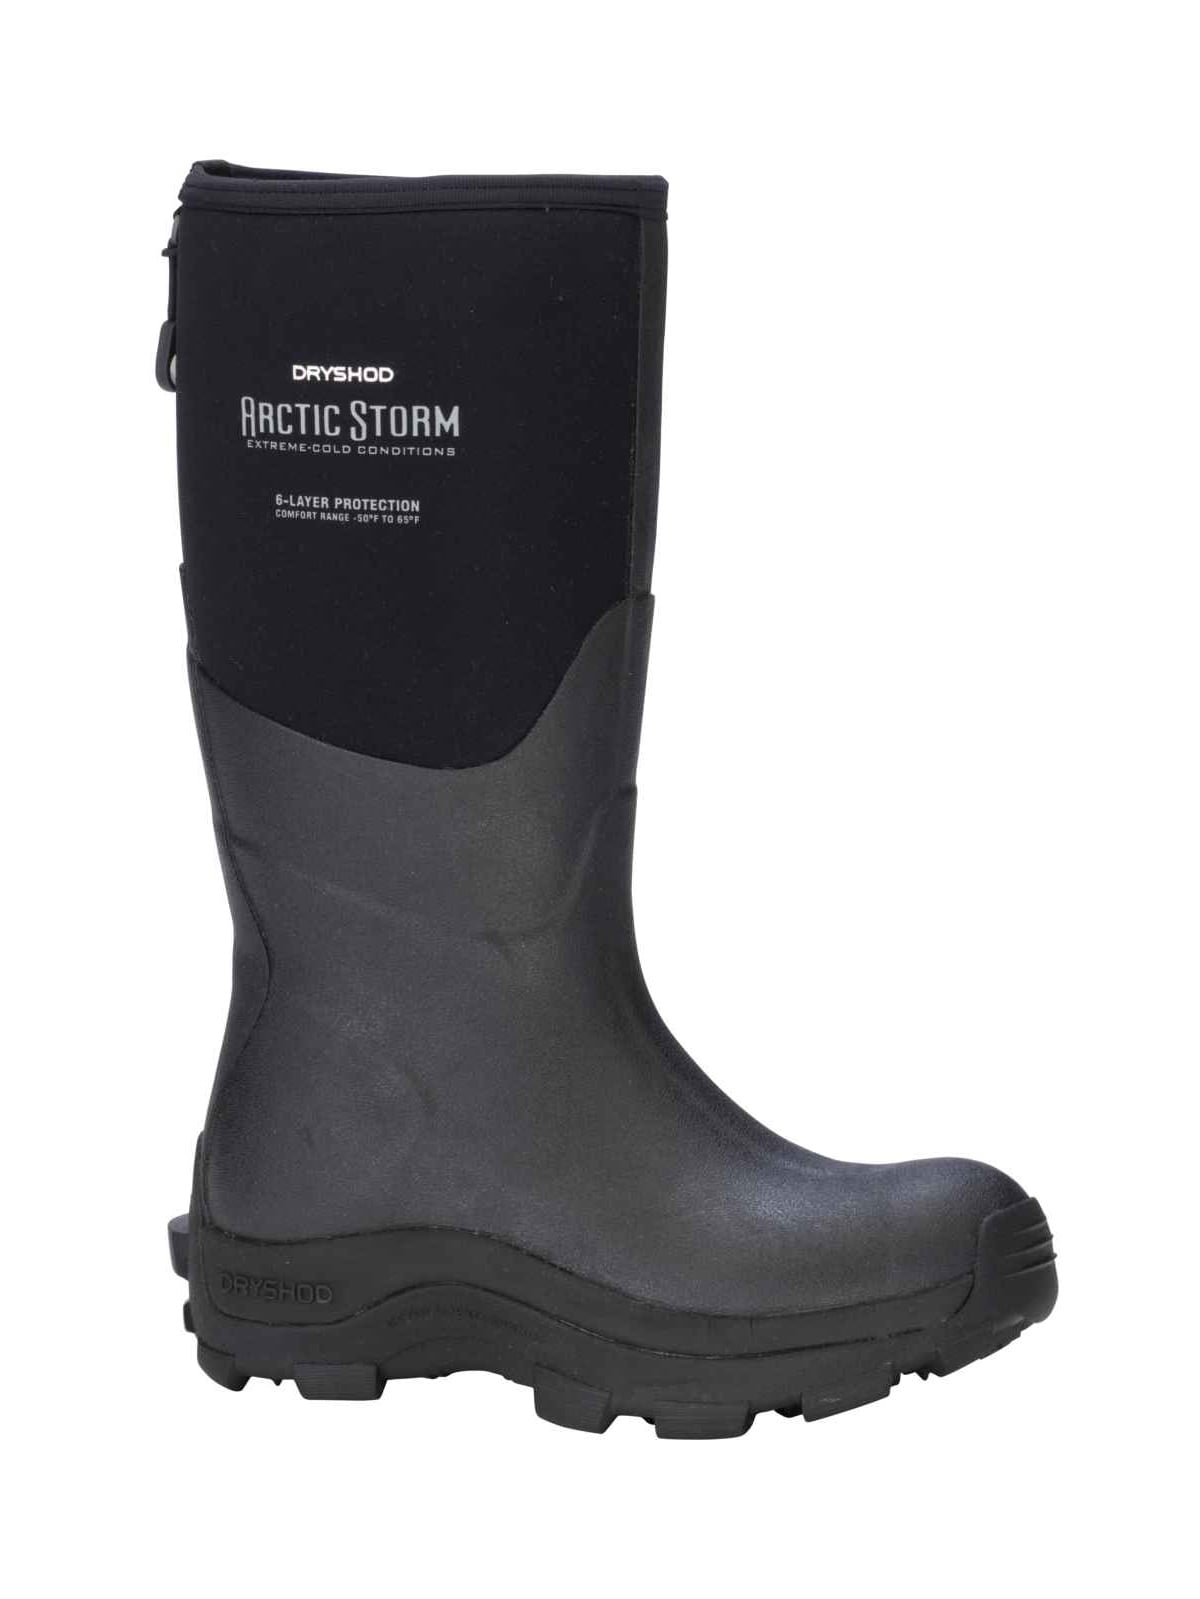 DRYSHOD Women's Arctic Storm Hi Size 8 Black/Grey Waterproof Insulated Boots